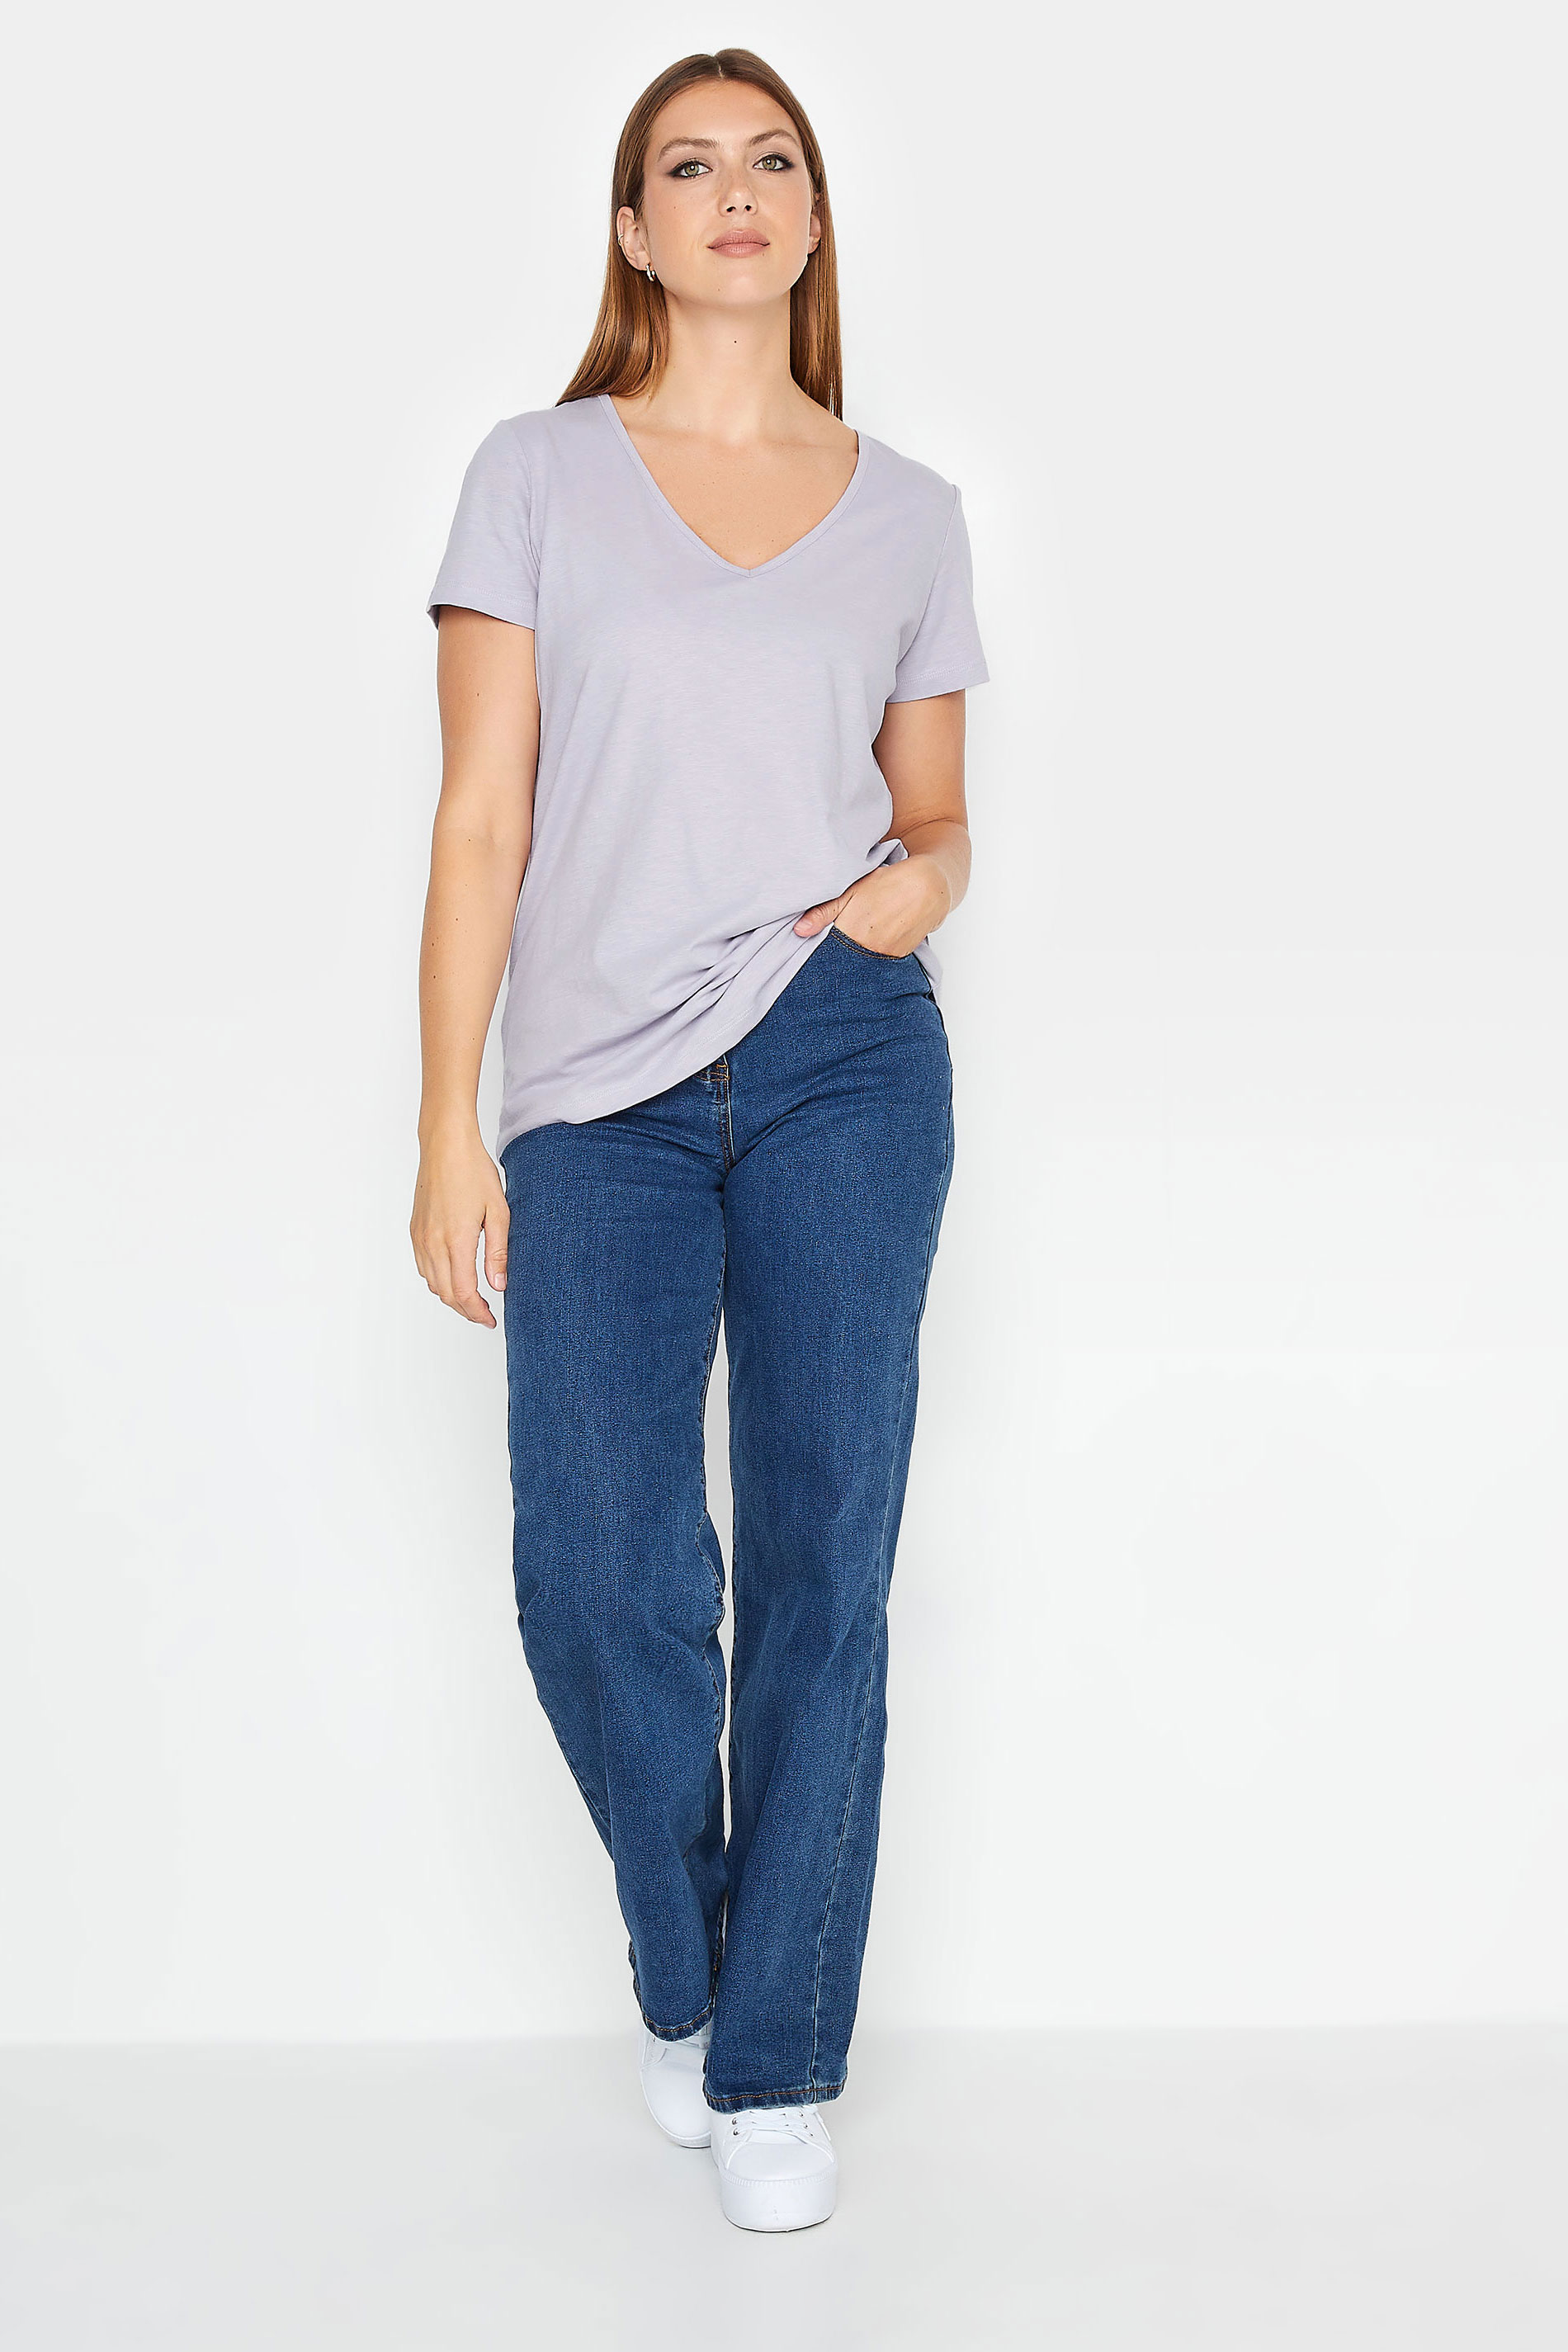 LTS Tall Lilac Purple Short Sleeve T-Shirt | Long Tall Sally  2